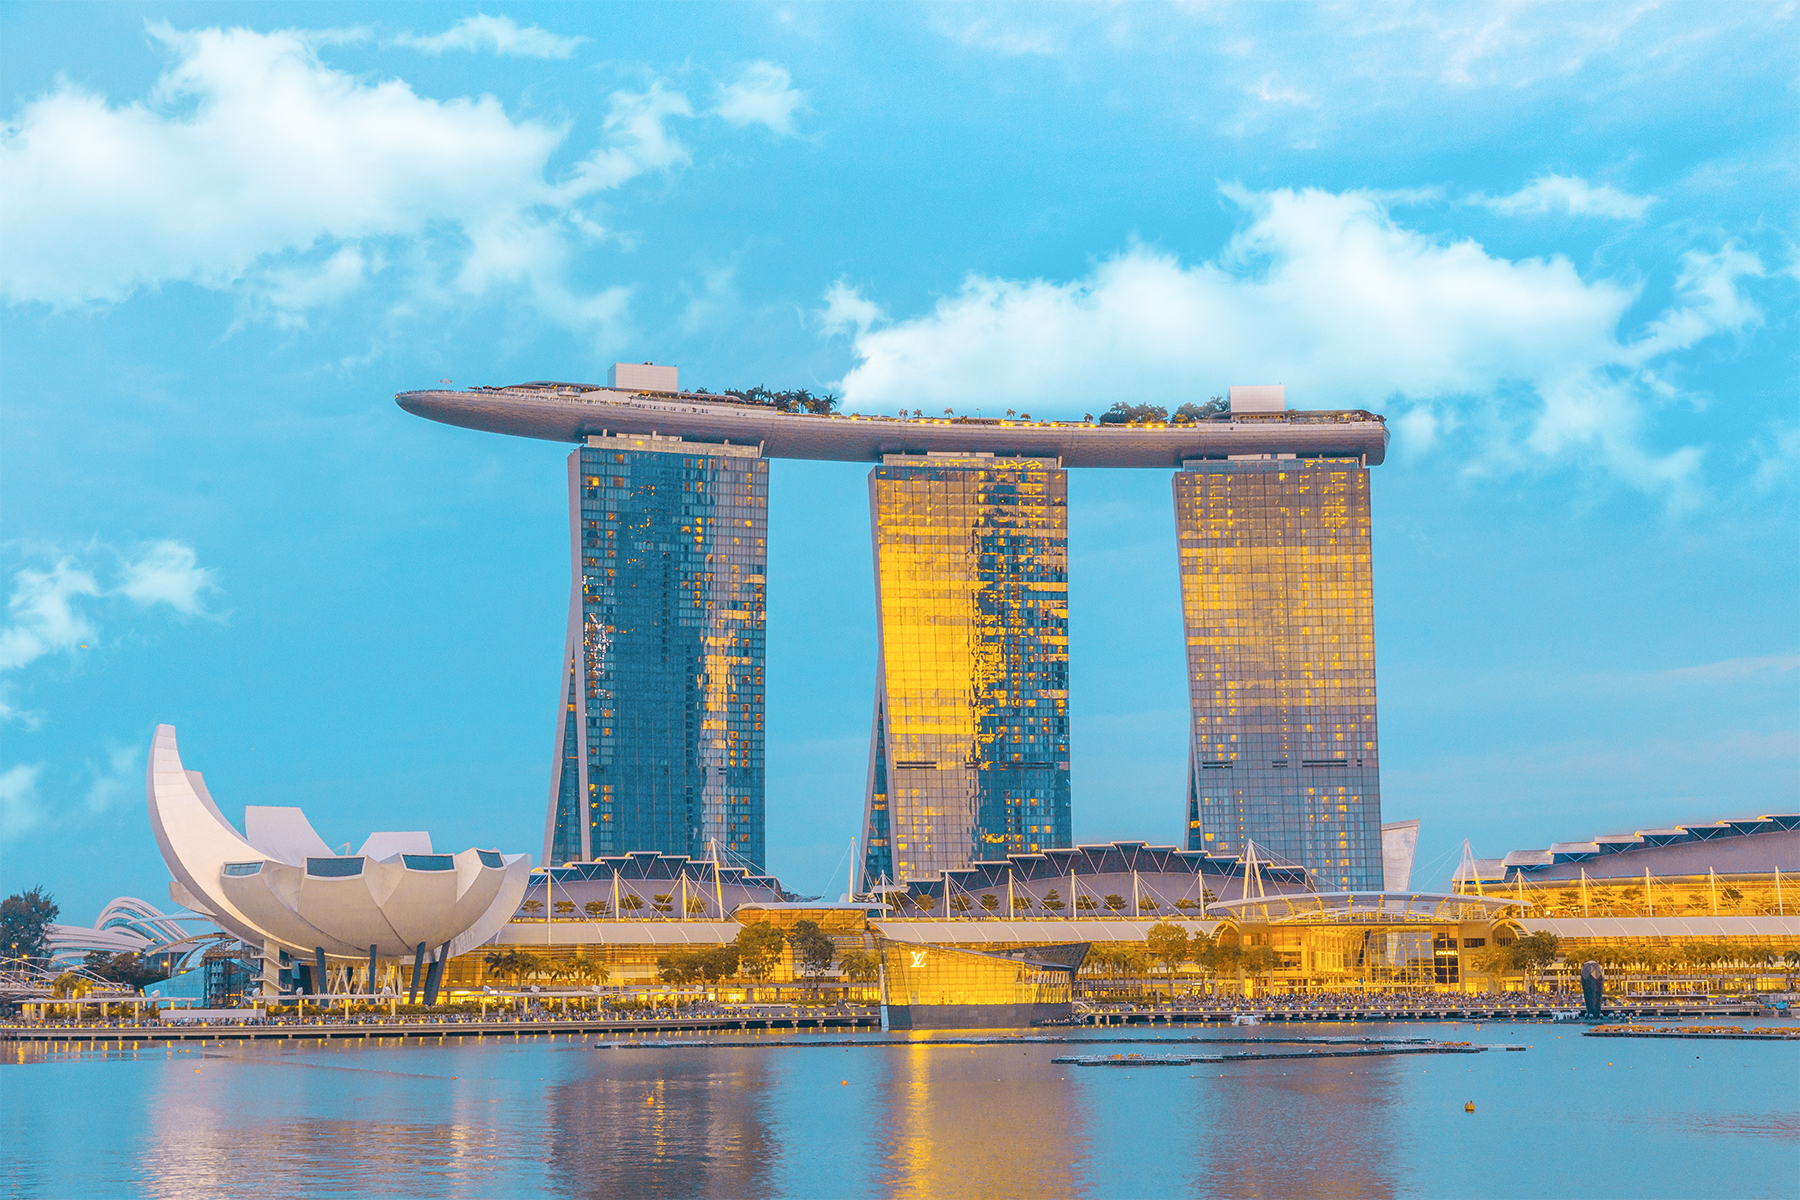 Tour du lịch Singapore của Du Lịch Thiên Nhiên 2022/2023 114997